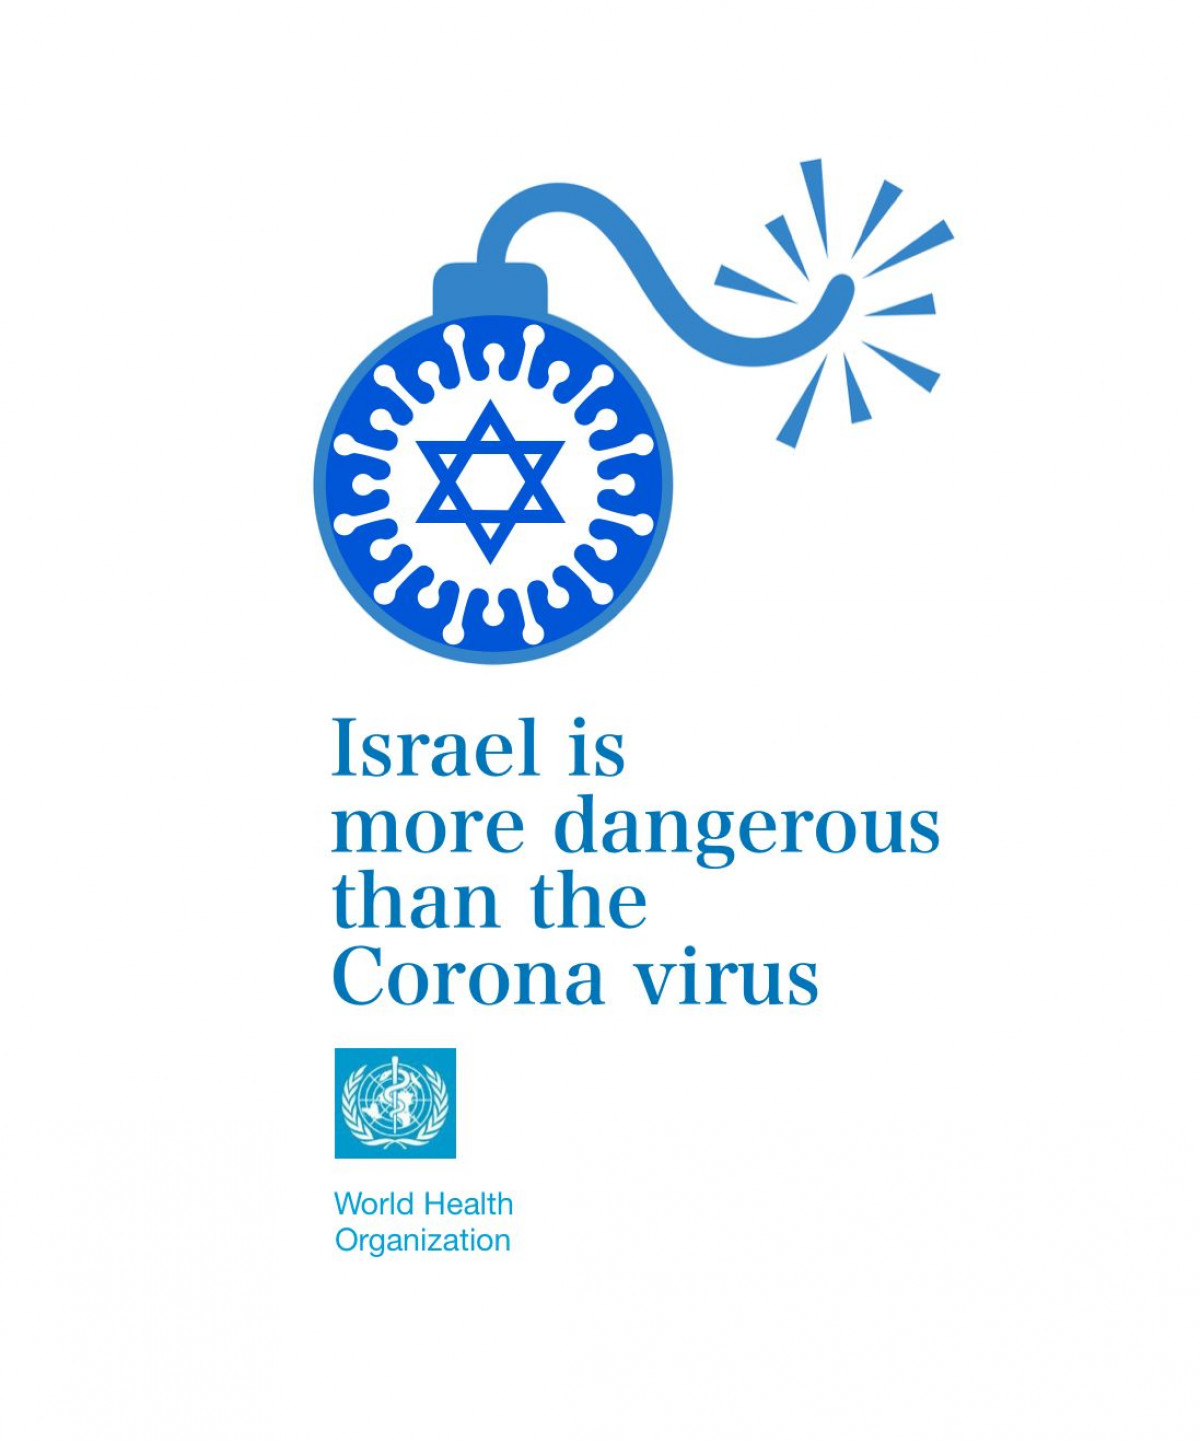 ISRAEL IS MORE DANEROUS THAN THE CORONA VIRUS